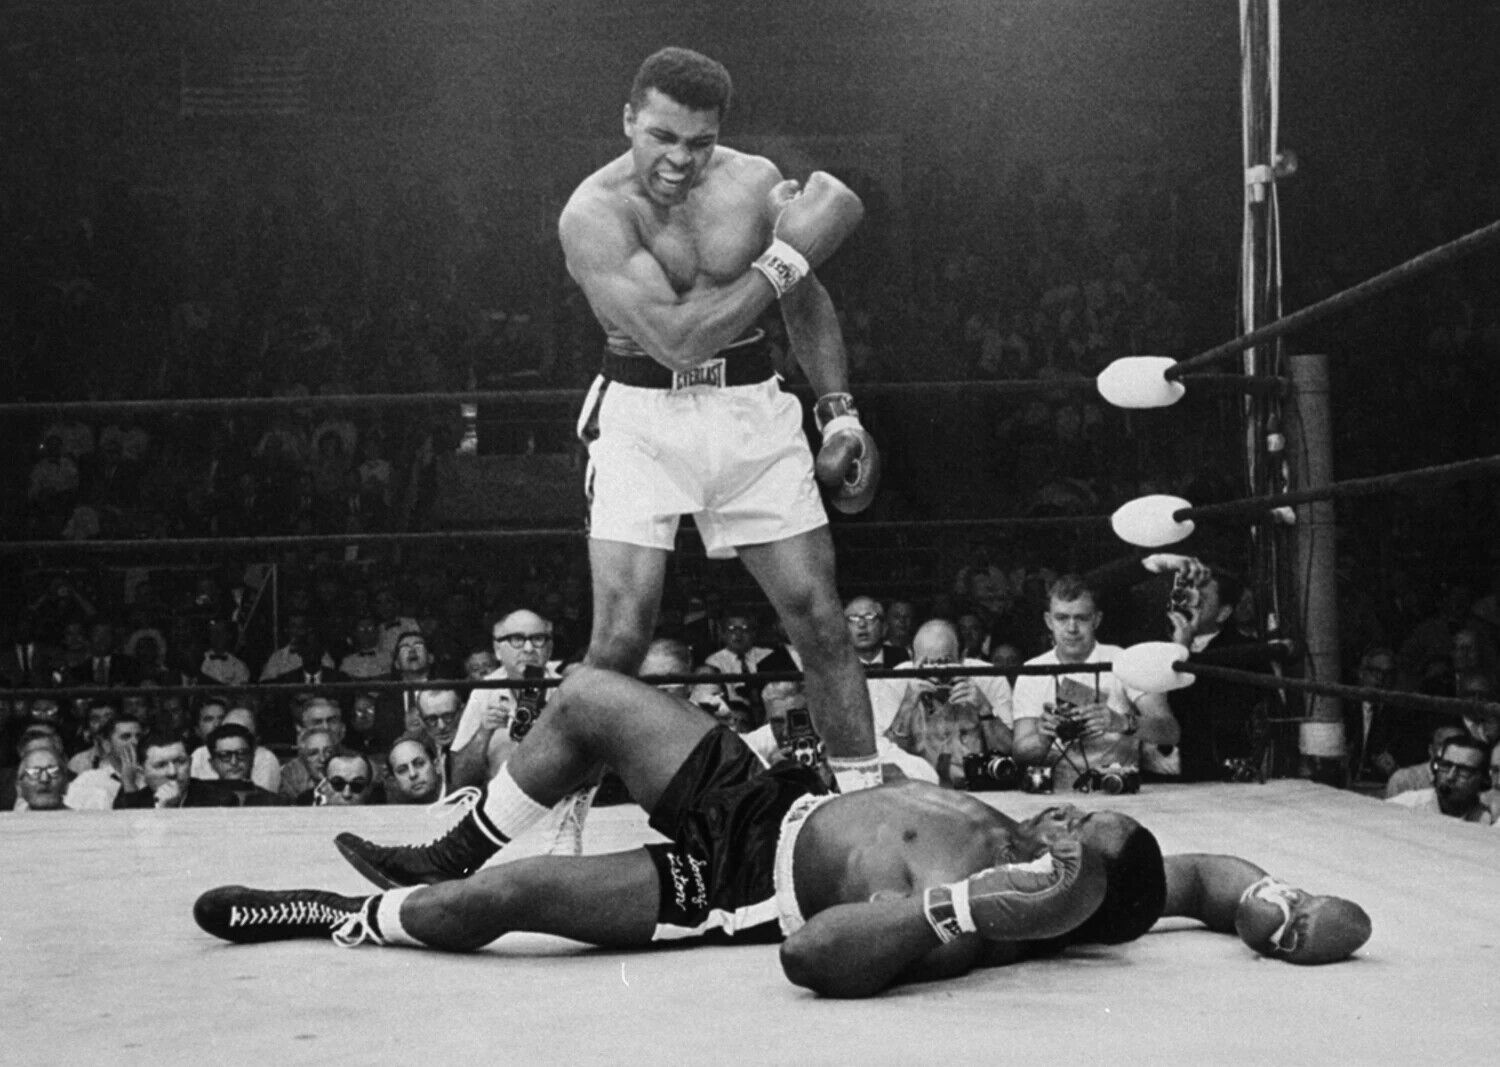 MUHAMMAD ALI KNOCKS OUT sonny liston Iconic Boxing Photo Print 8